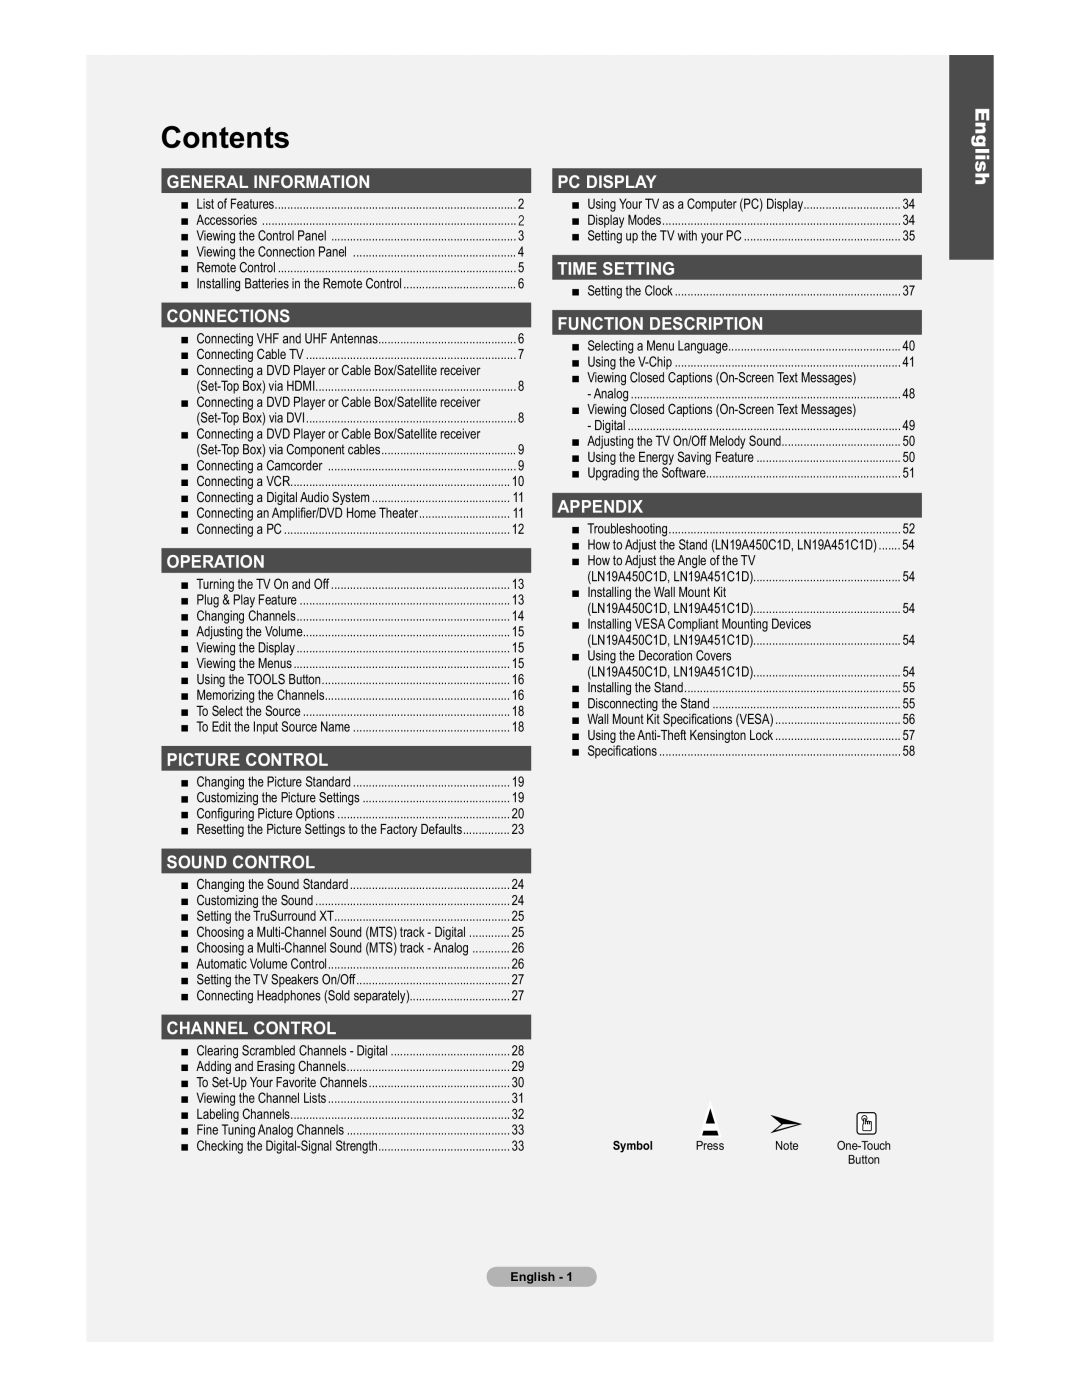 Samsung 451 user manual Contents, English 